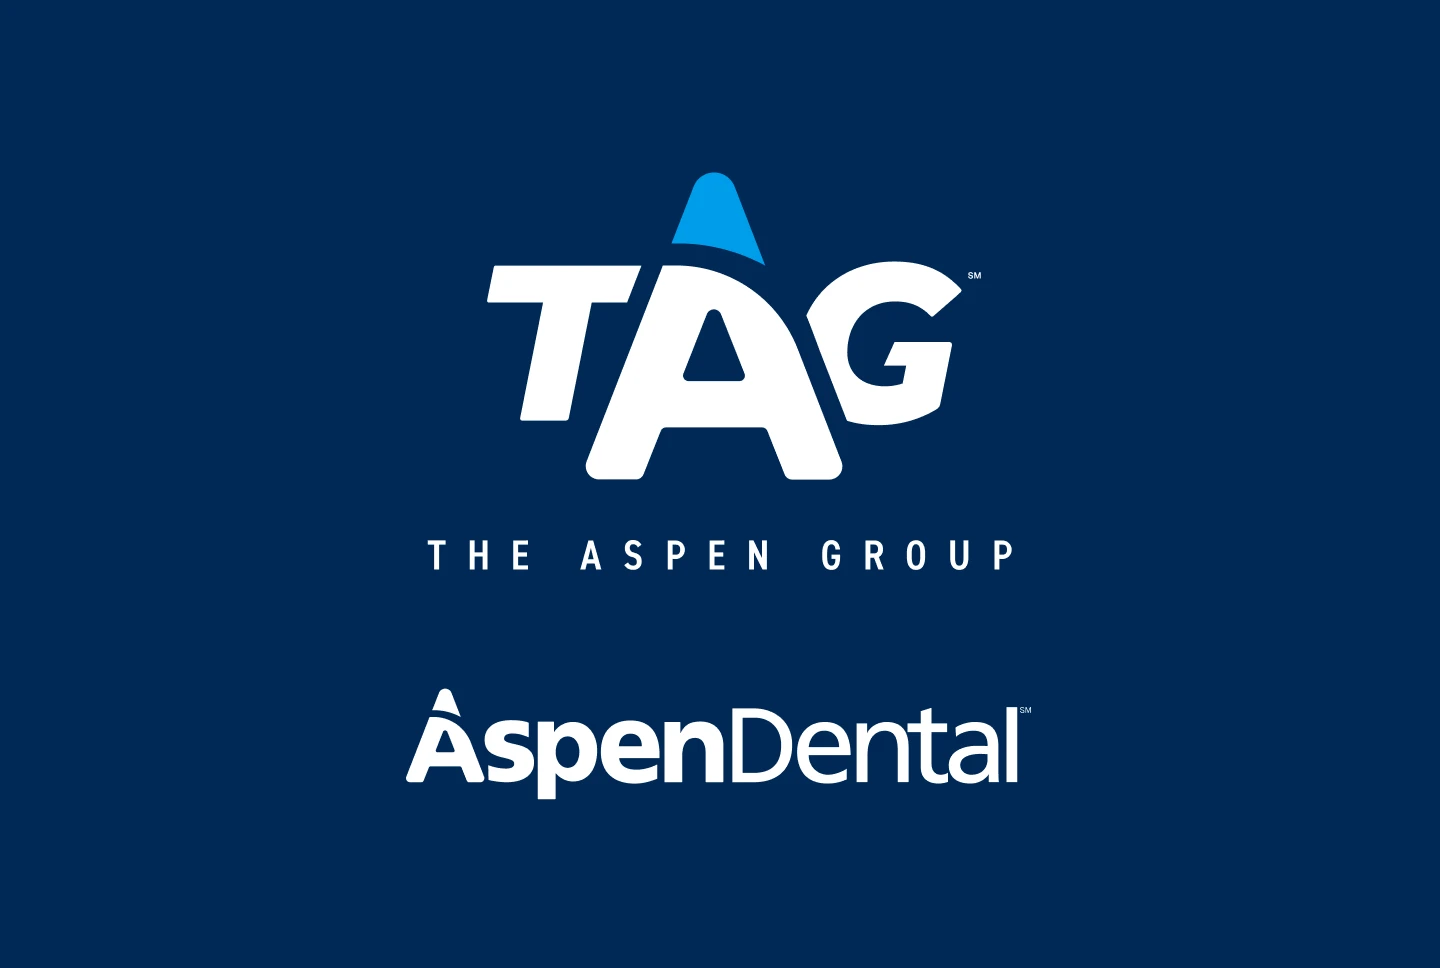 The Aspen Group and Aspen Dental logos. 